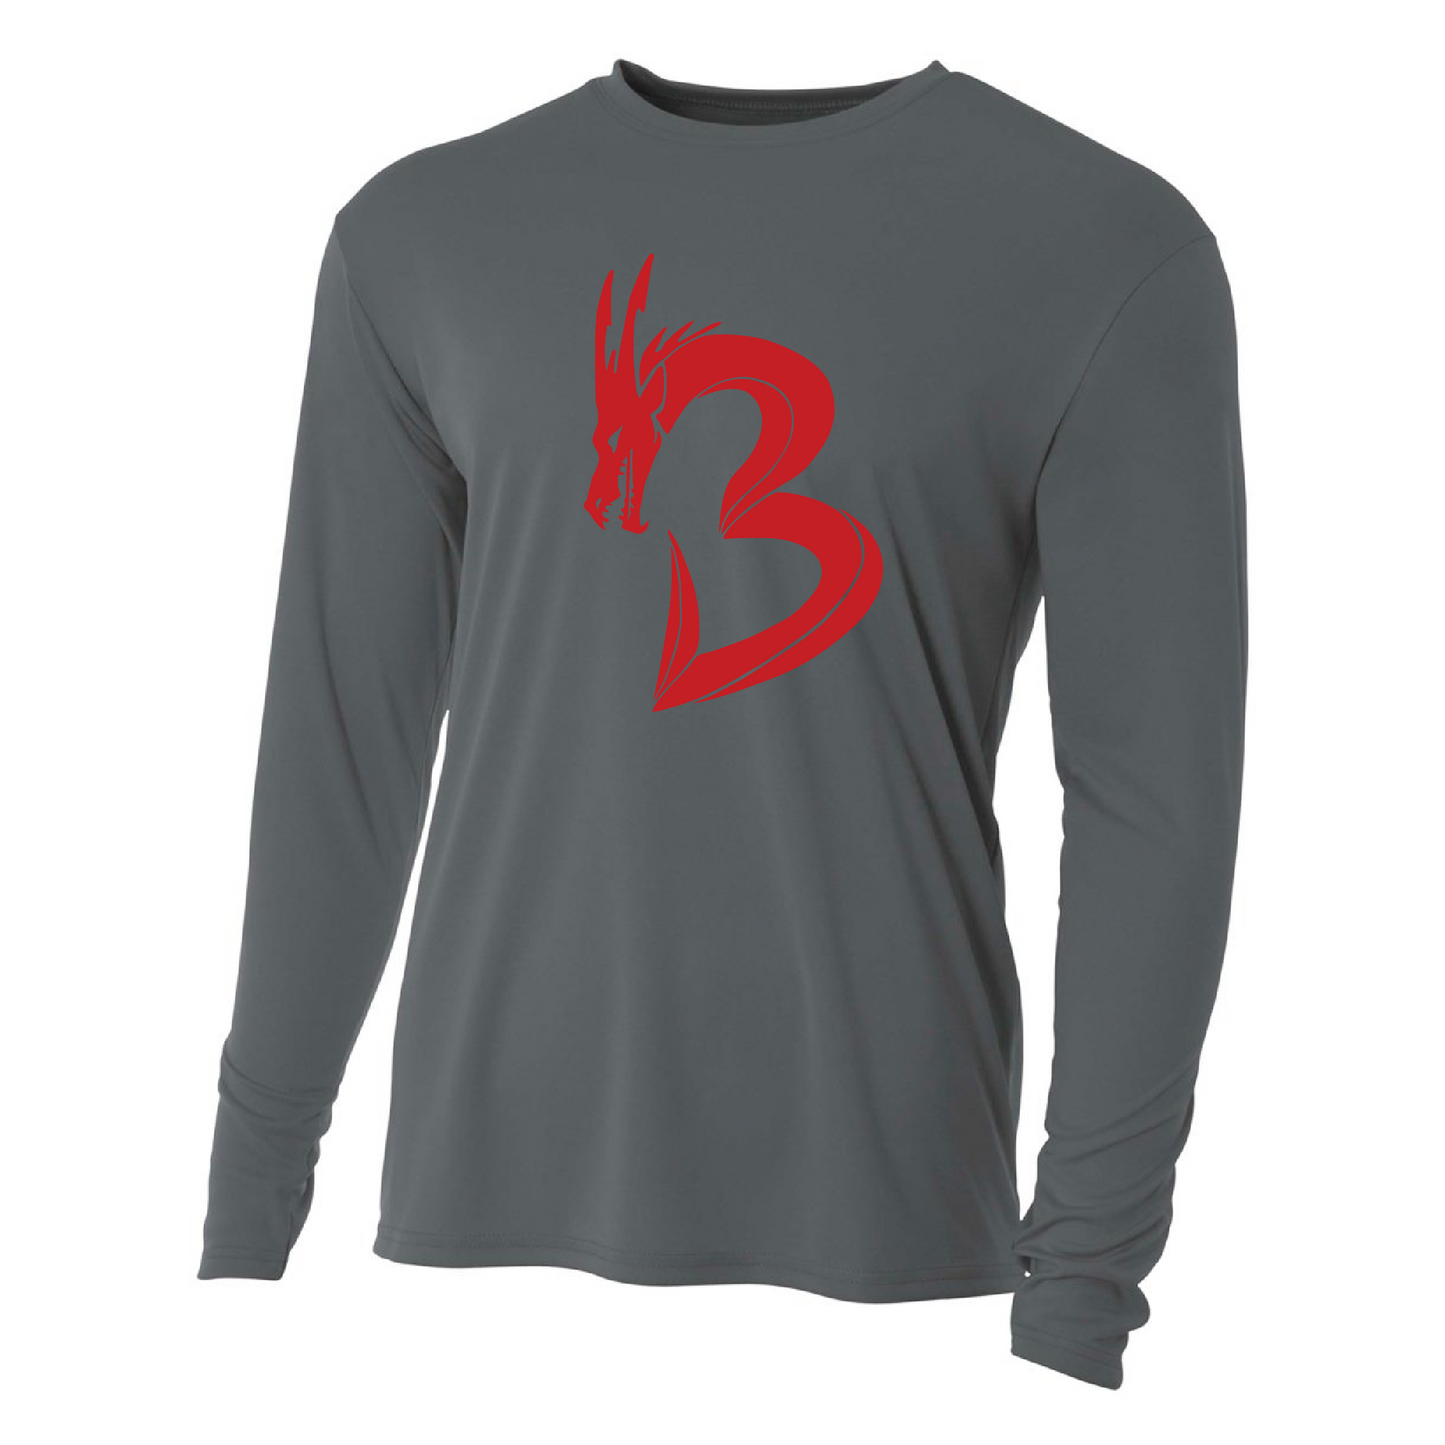 Mens L/S T-Shirt - NP Bands "B" Dragon (red)